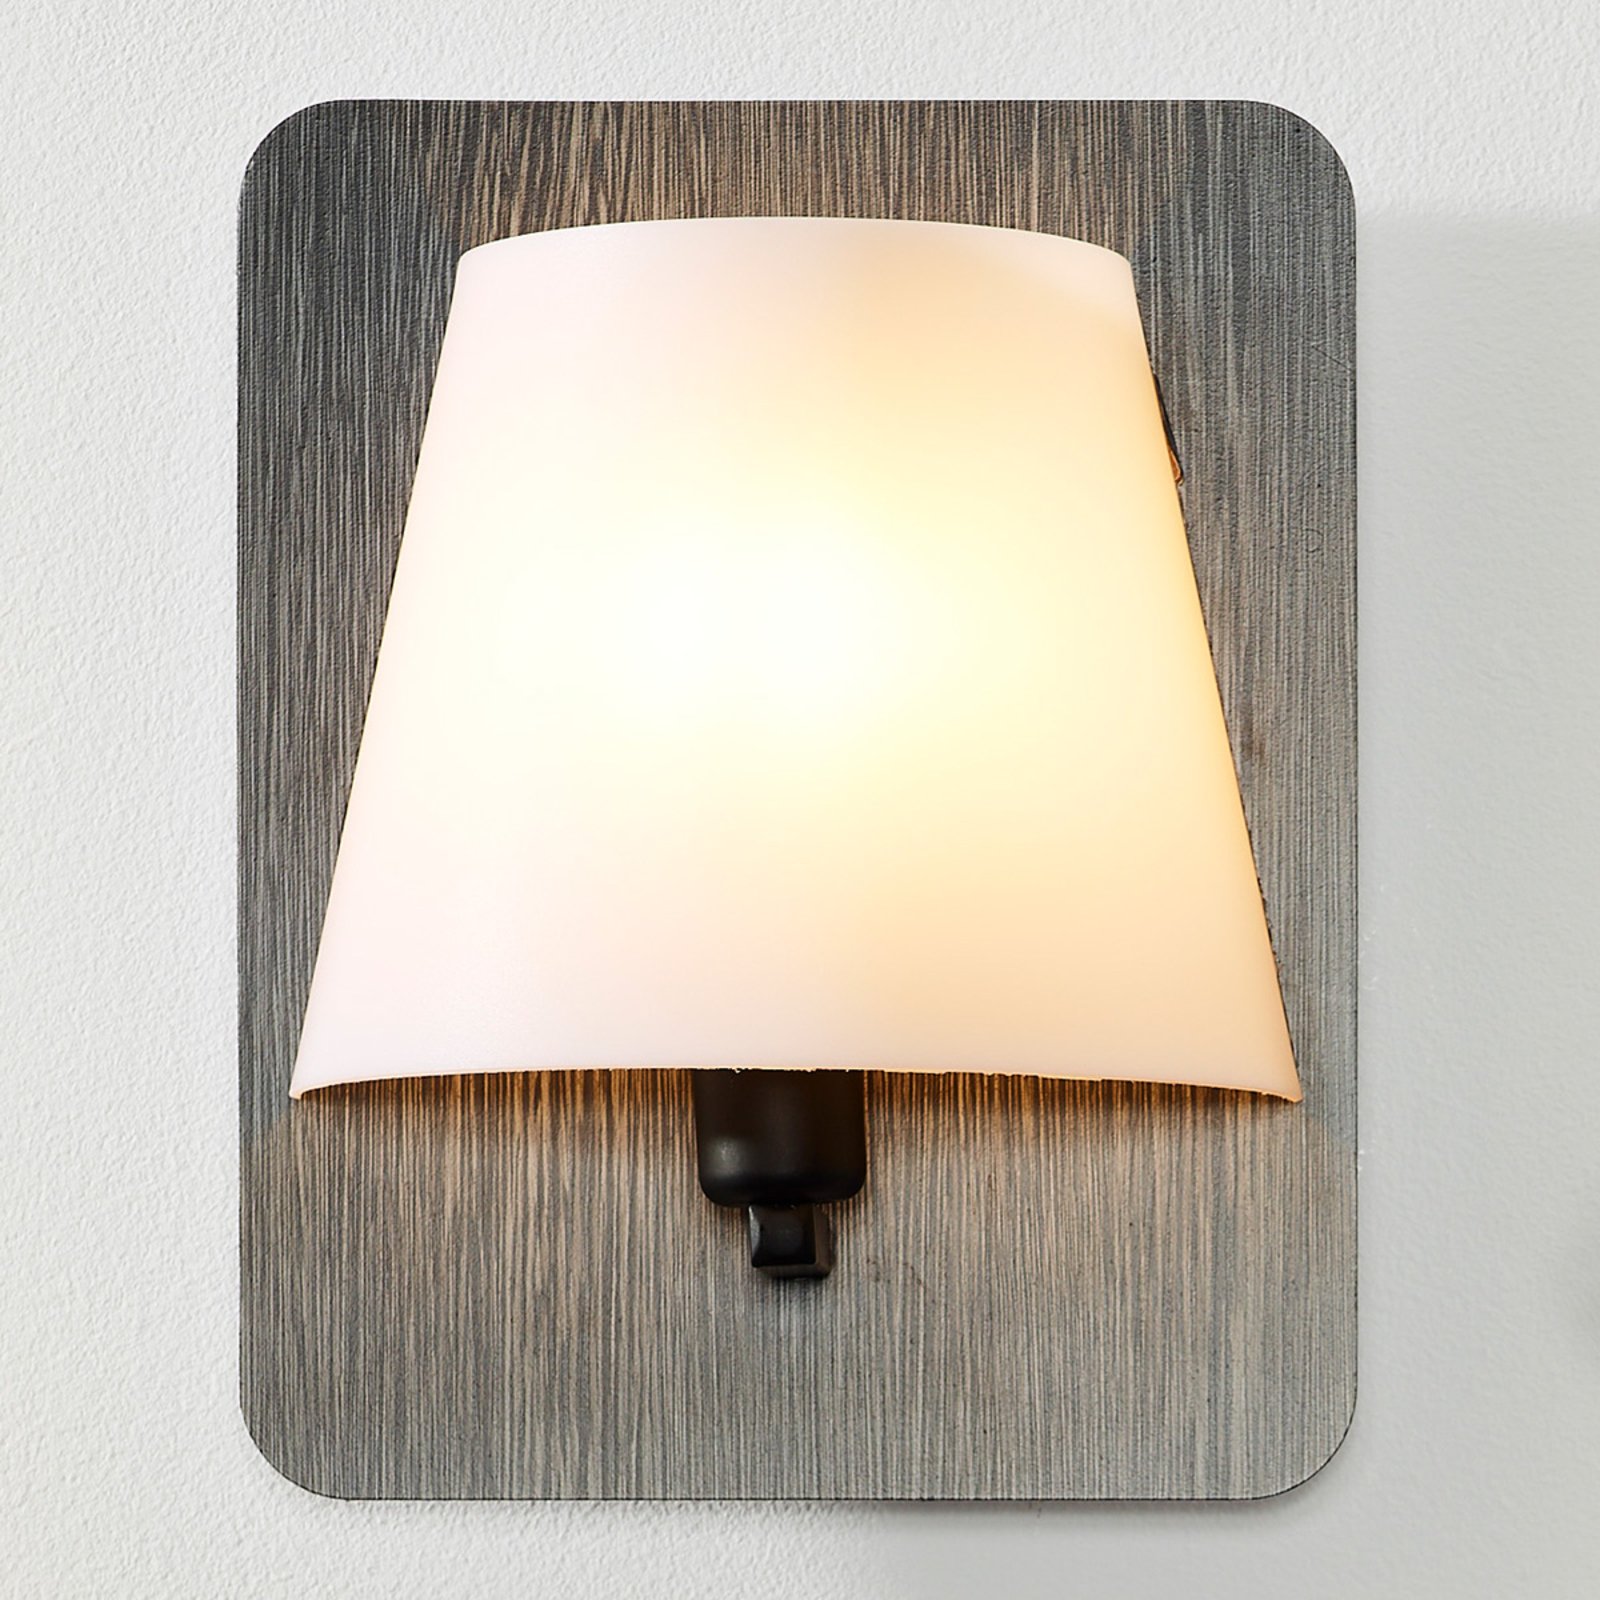 Houten wandlamp Idaho, hout grijs